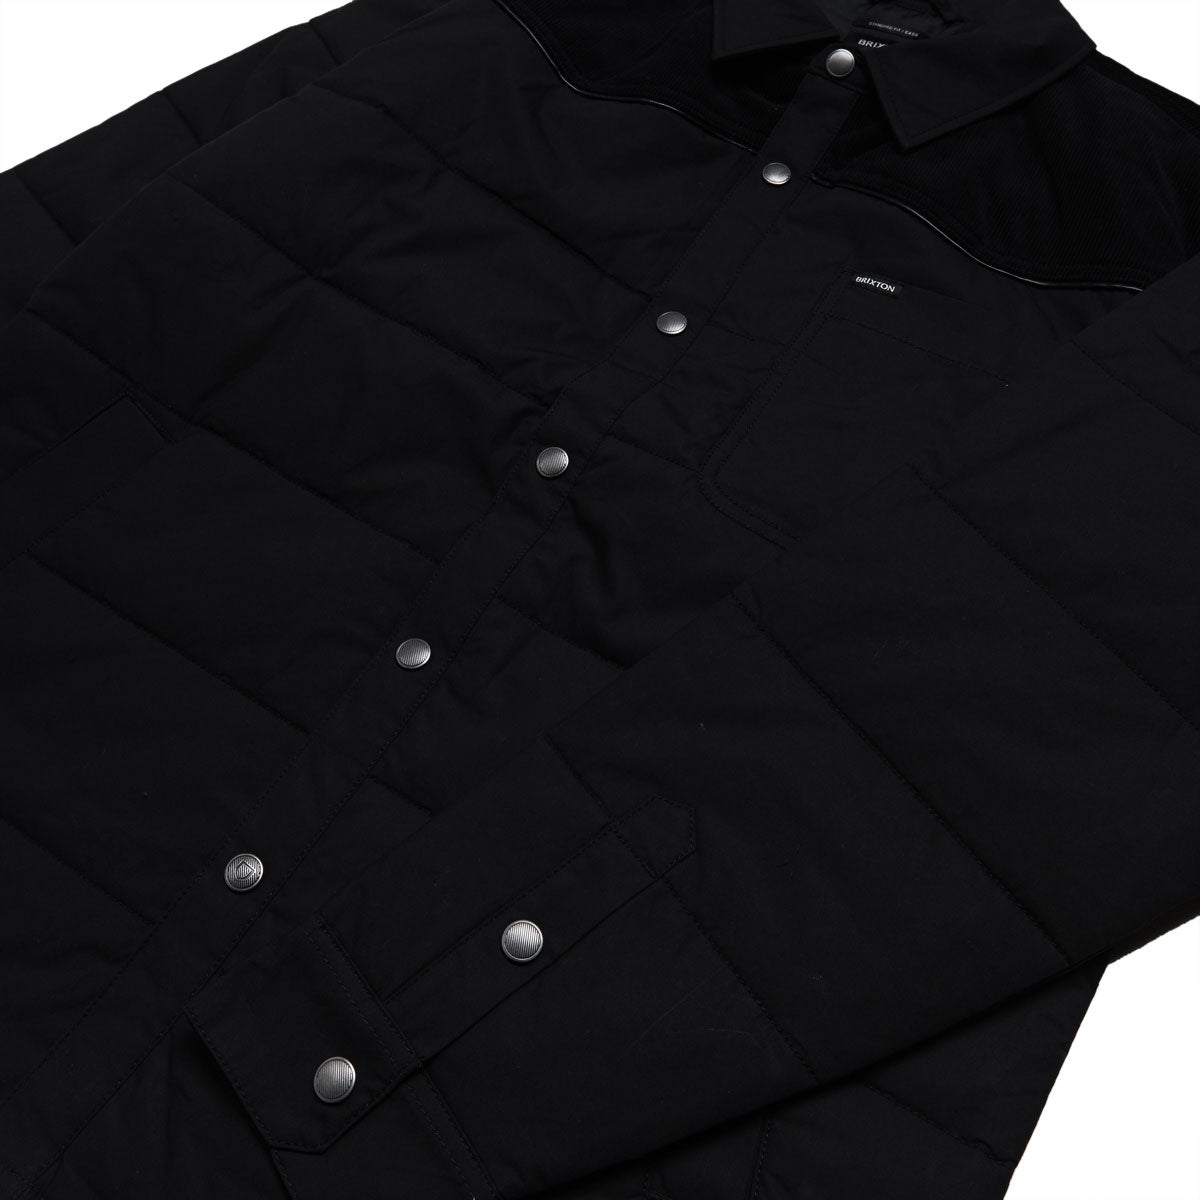 Brixton Cass Jacket - Black/Black Cord image 3